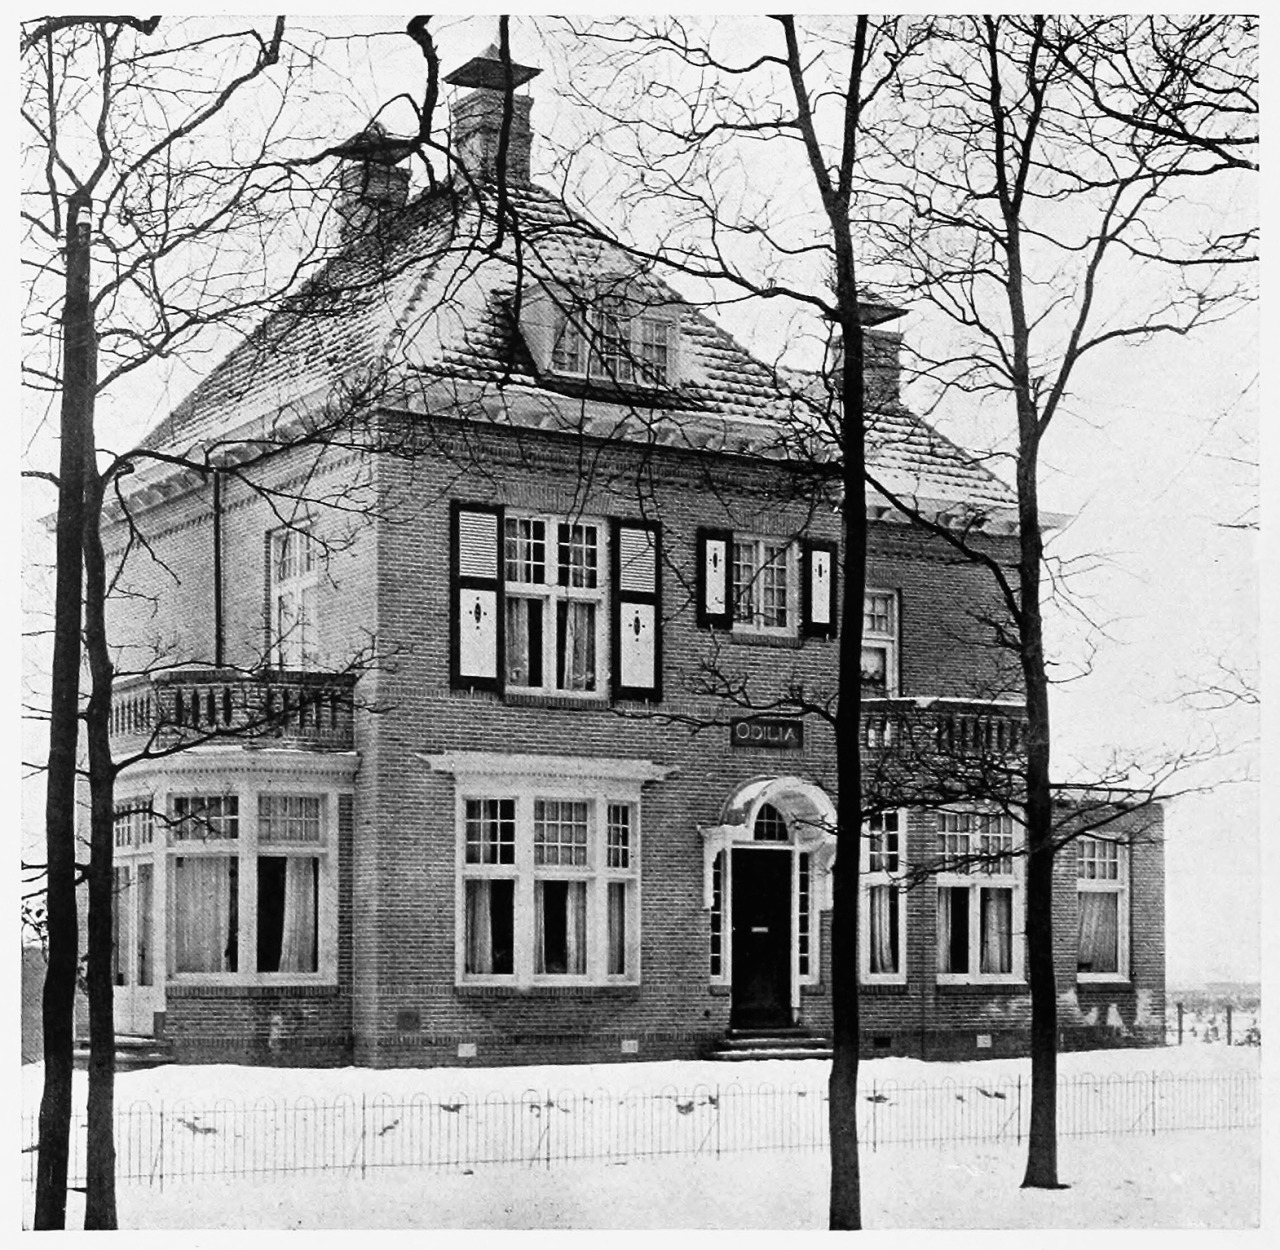 Netherlands, 1917: Doctor’s House in HillegomA large two-story house with a doctor’s office.Het Moderne Landhuis in Nederland by J. H. W. Leliman and K. Sluyterman, 1917. (’s-Gravenhage, Netherlands) #1910s#netherlands